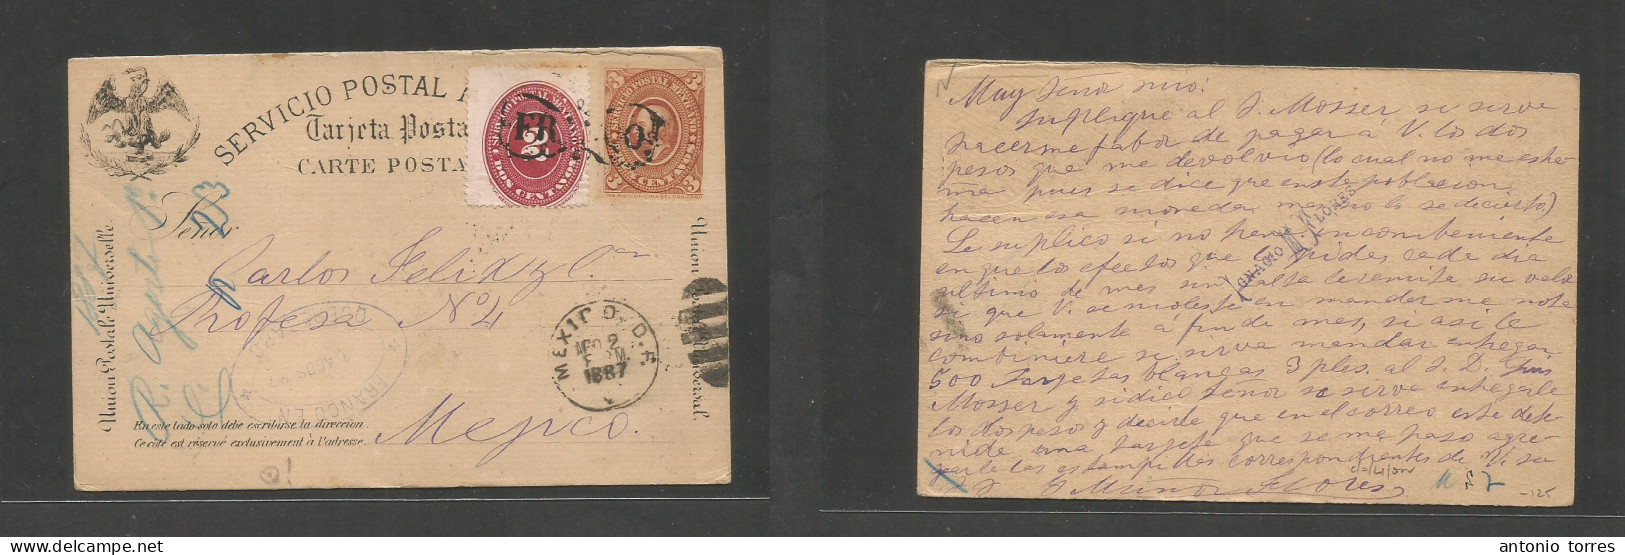 Mexico - Stationery. 1887 (1 Aug) Queretaro - DF (2 Aug) 3c Brown Medalion Stat Card + 2c Red Numeral Adtl, Tied Smashin - Mexique